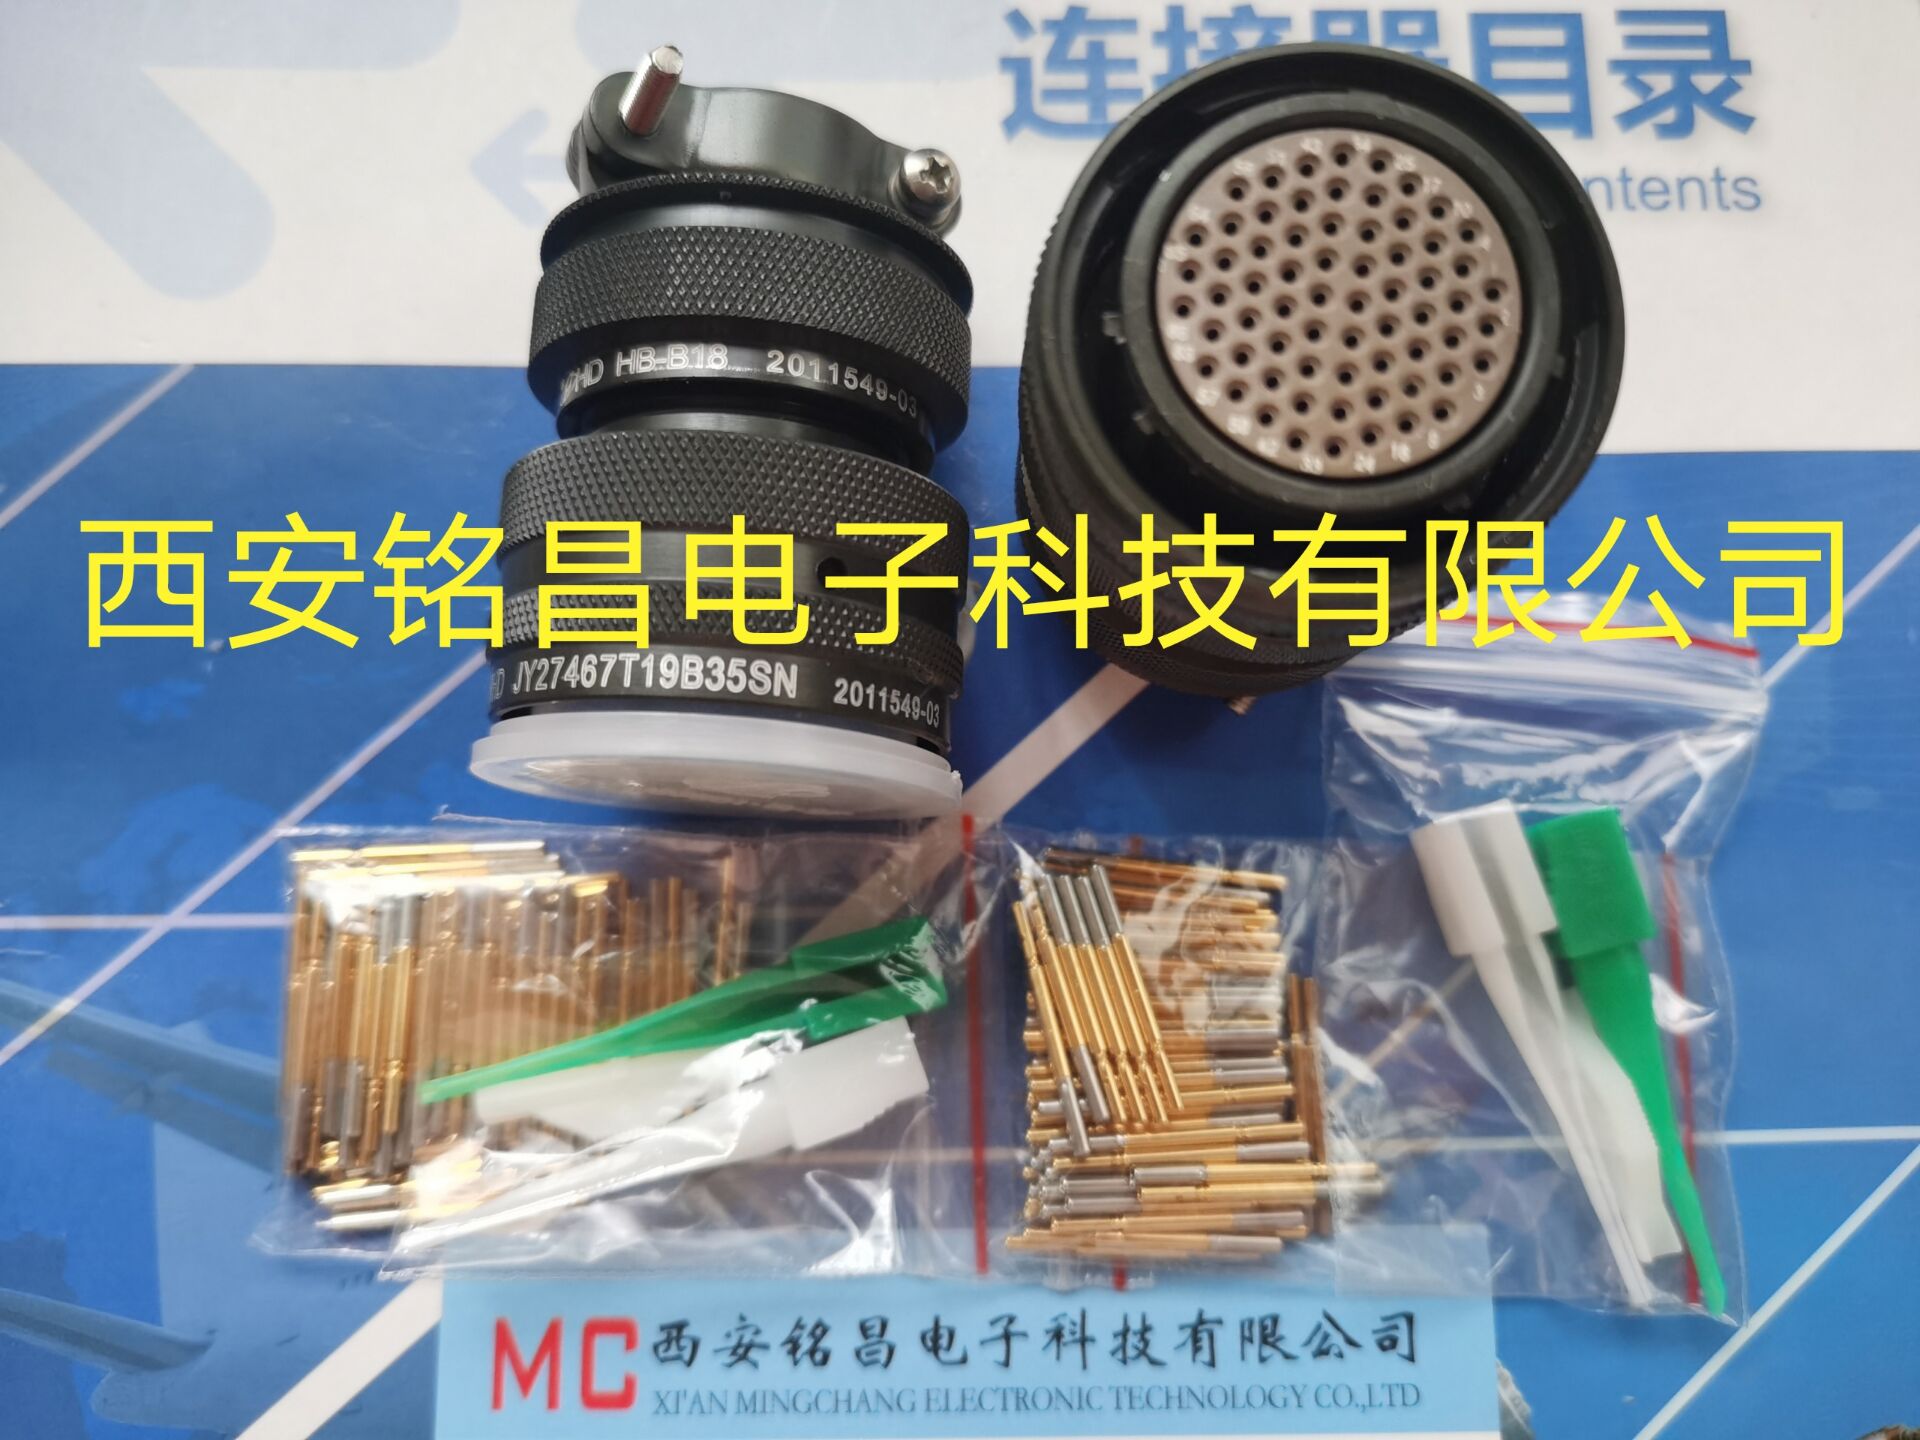 MCDZ西安铭昌销售JY27467T09N3SA-H圆形连接器-厂家直销